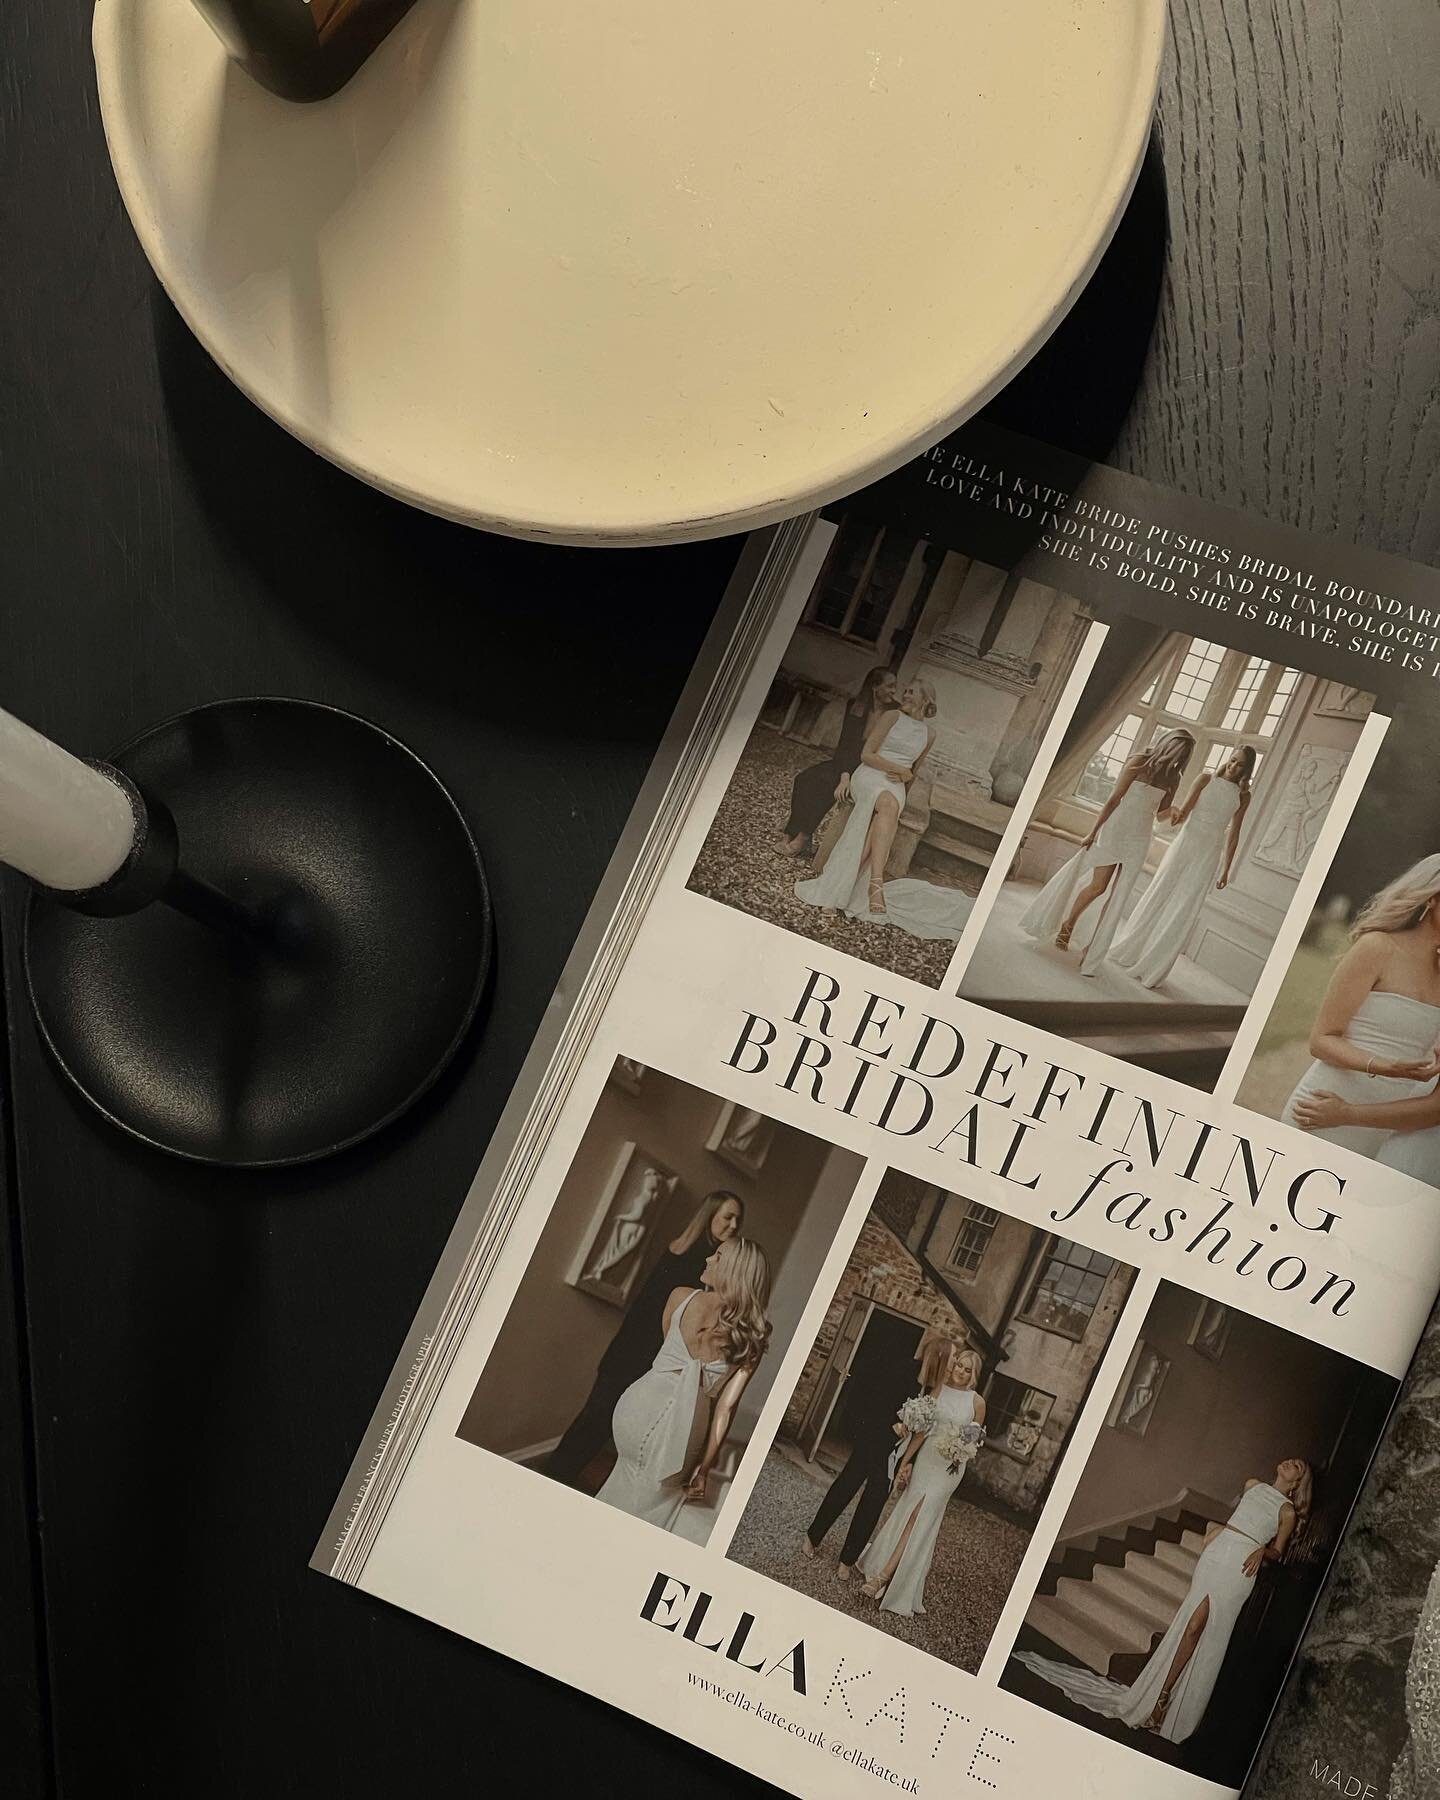 REDEFINING BRIDAL FASHION📸 
@bellebridalmagazine 

#ukbridal #ukbridaldesigner #bellebridalmagazine